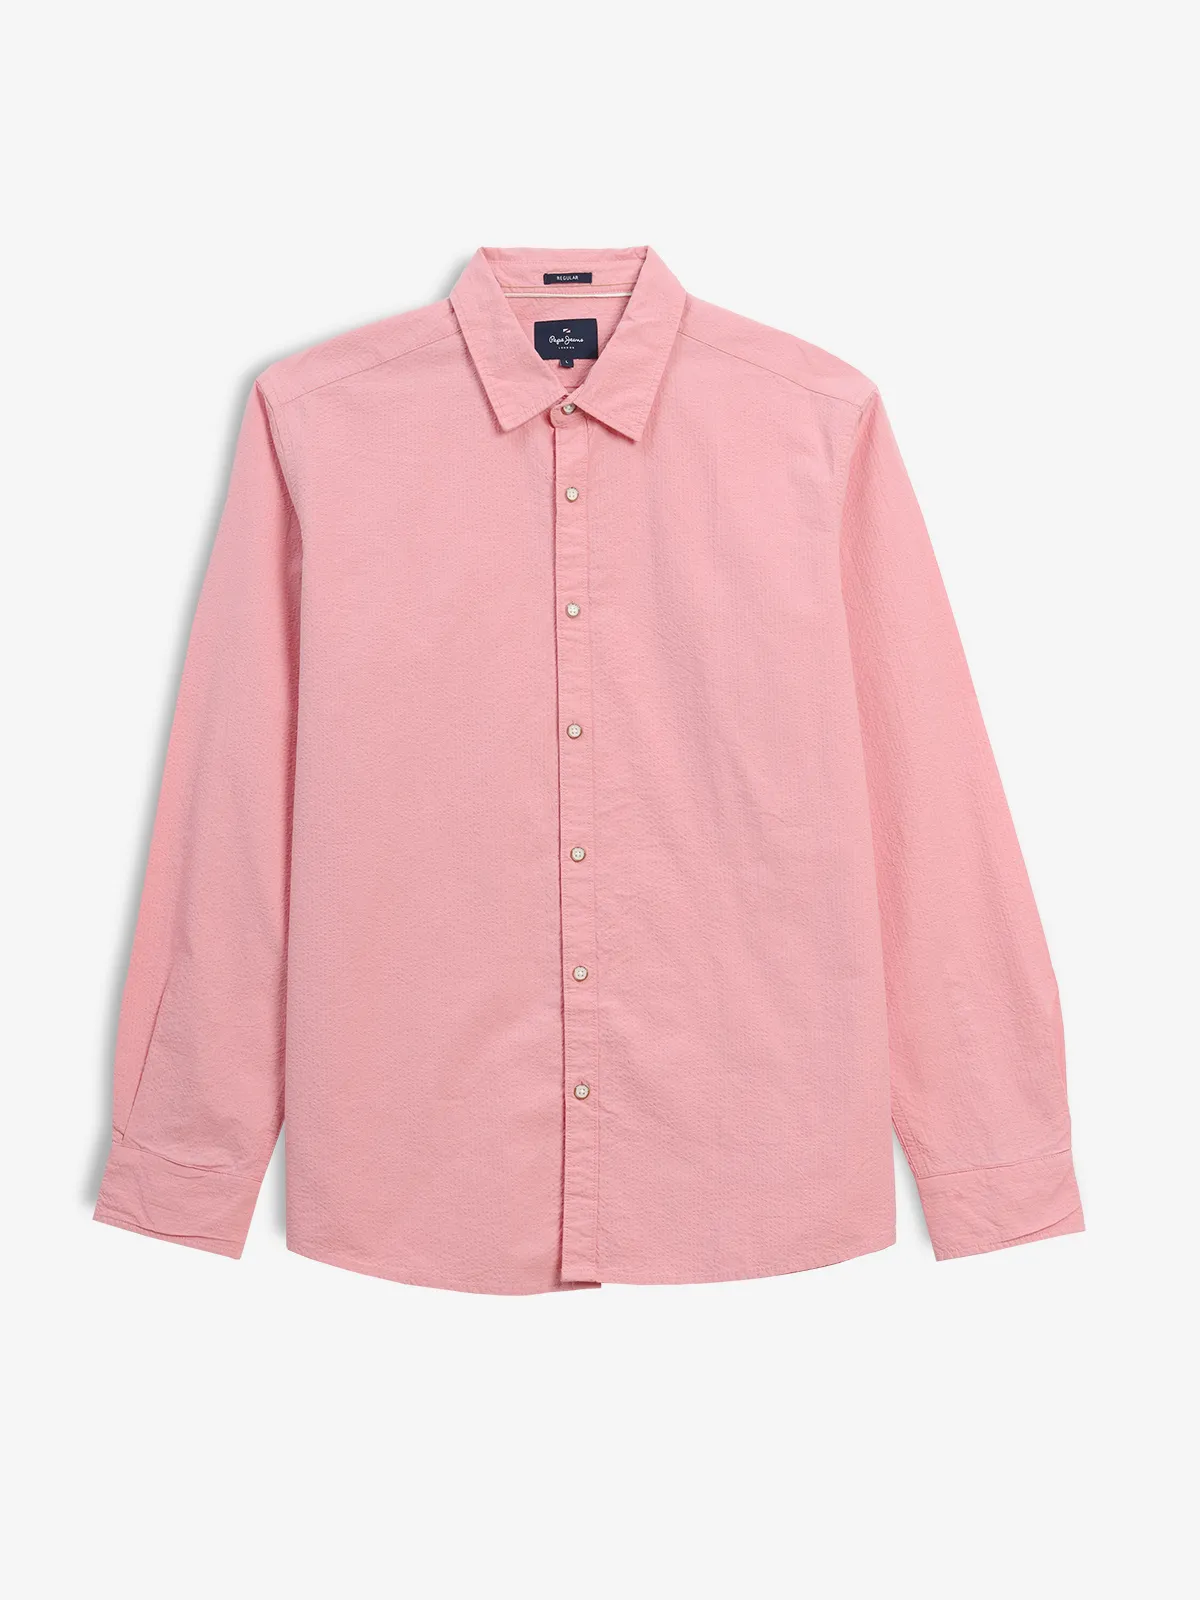 PEPE JEANS pink texture regular fit shirt